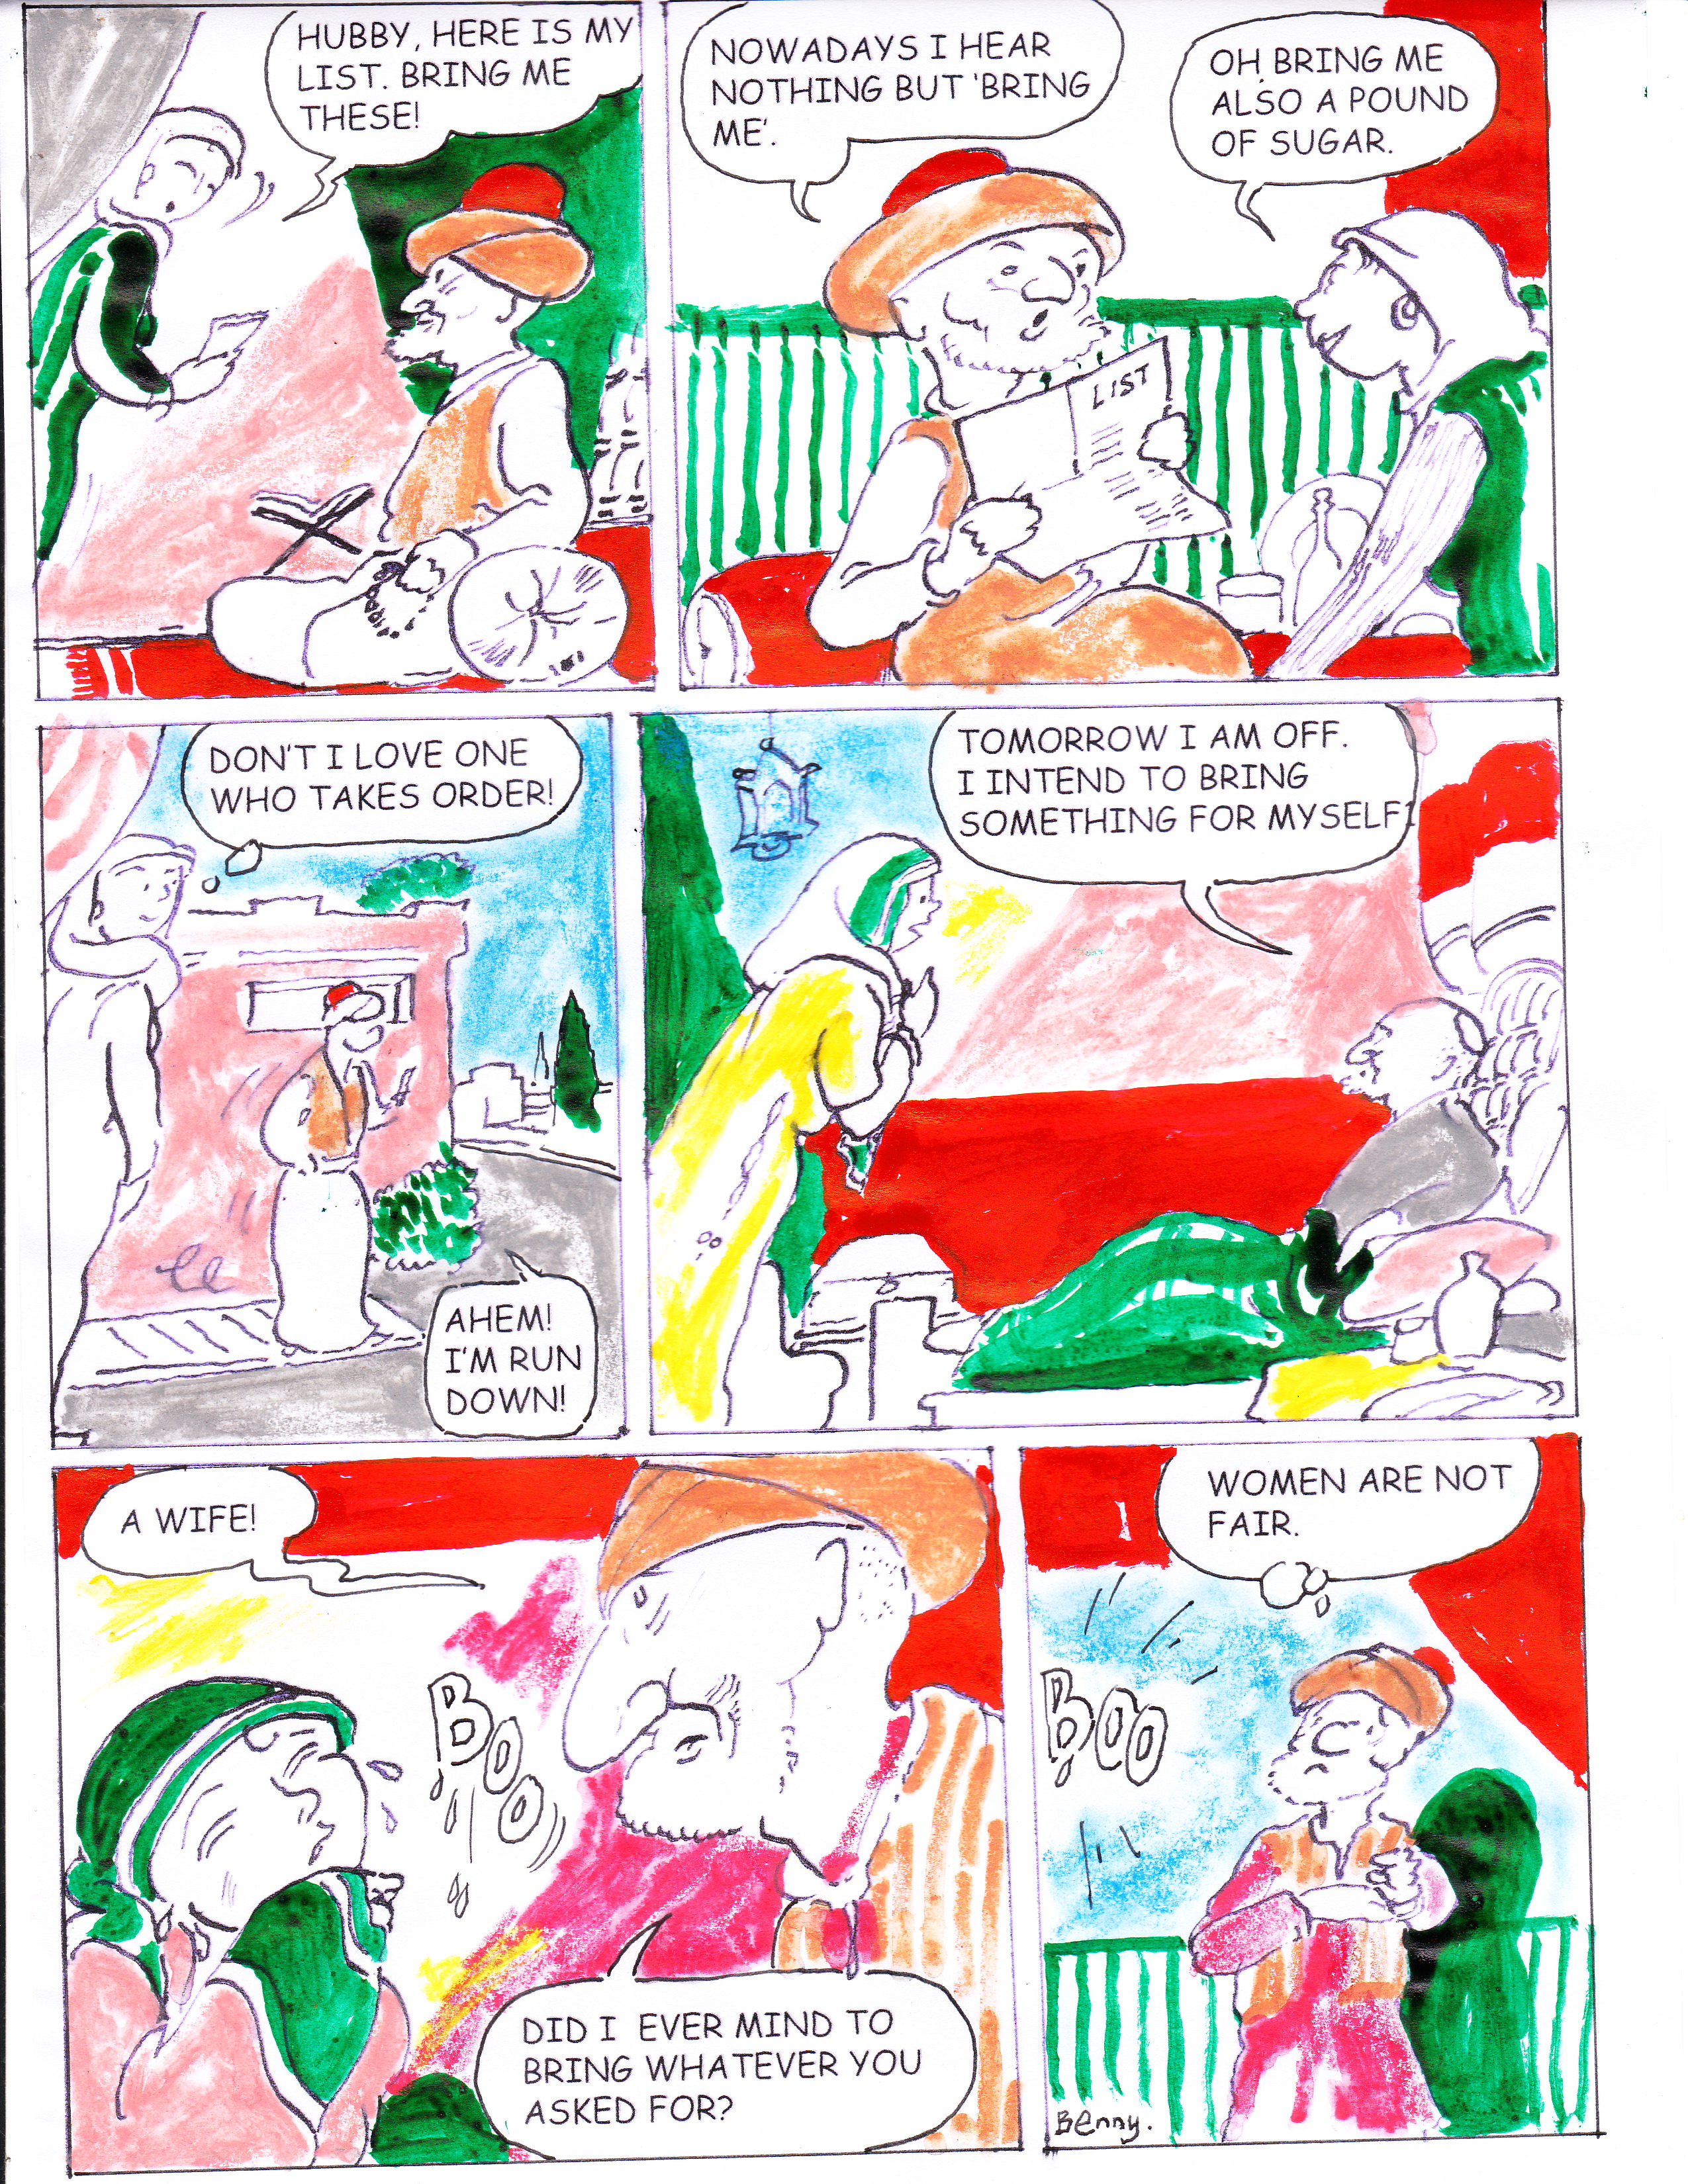 Mulla Nasruddin comic strip-1-12 | Bennythomas's Weblog